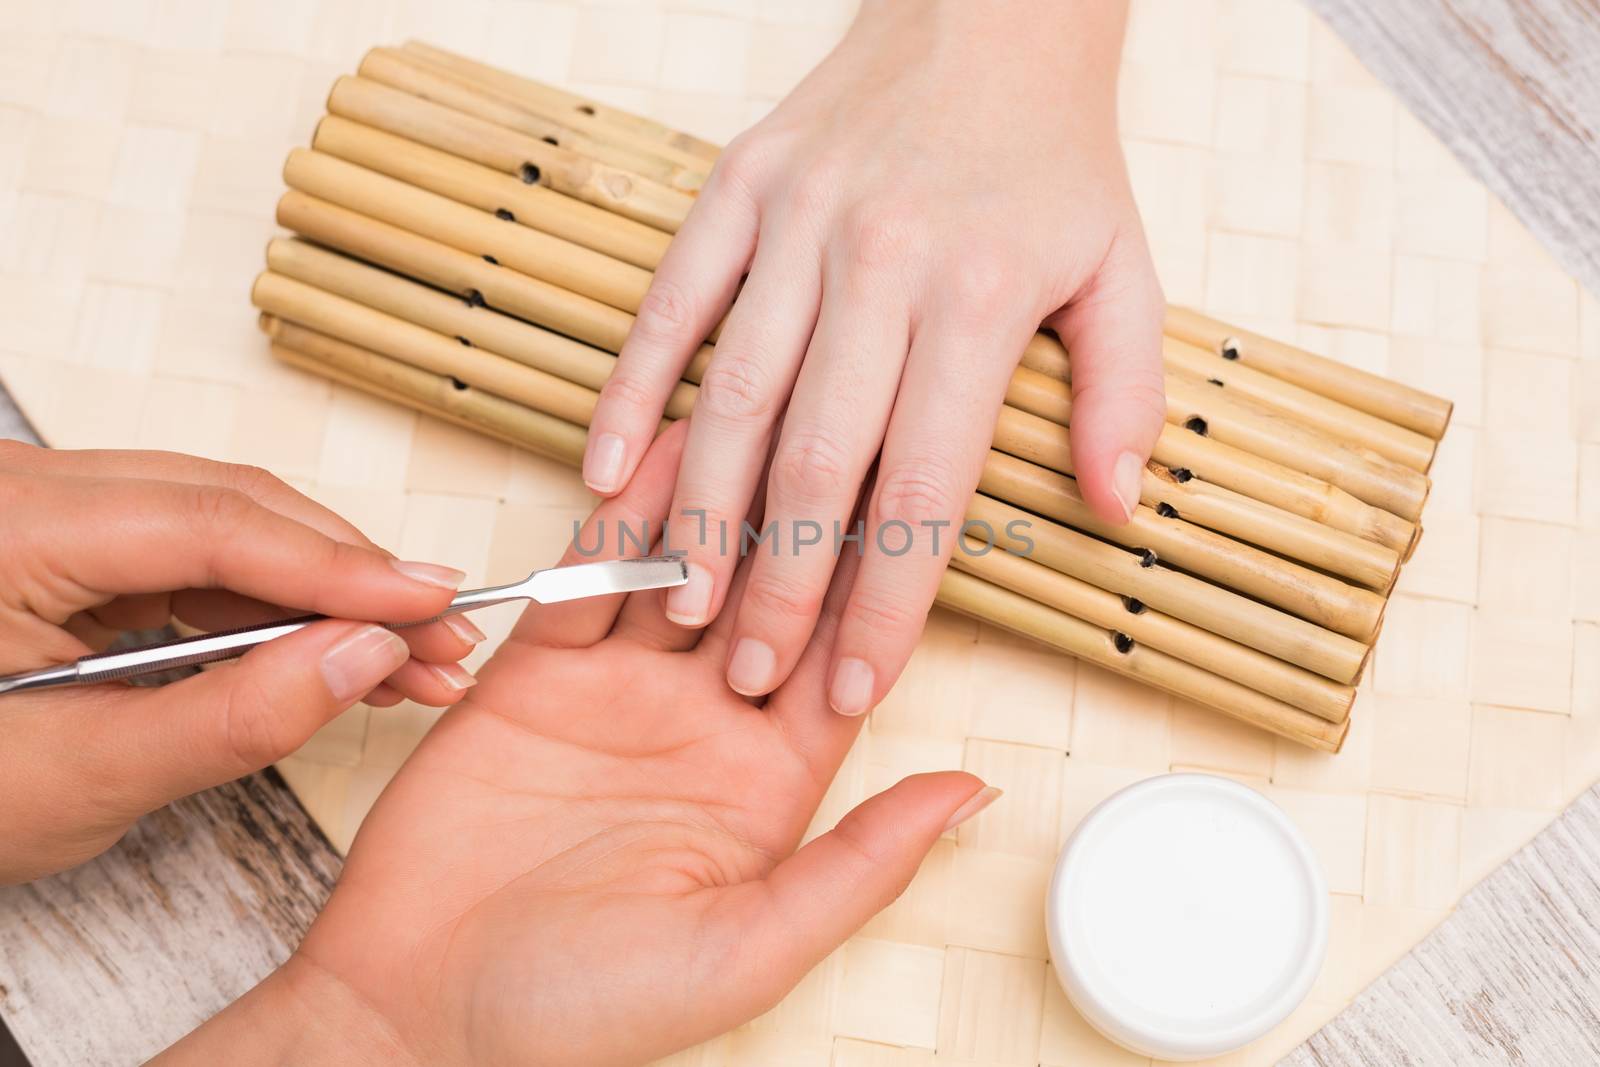 Nail technician giving customer a manicure by Wavebreakmedia